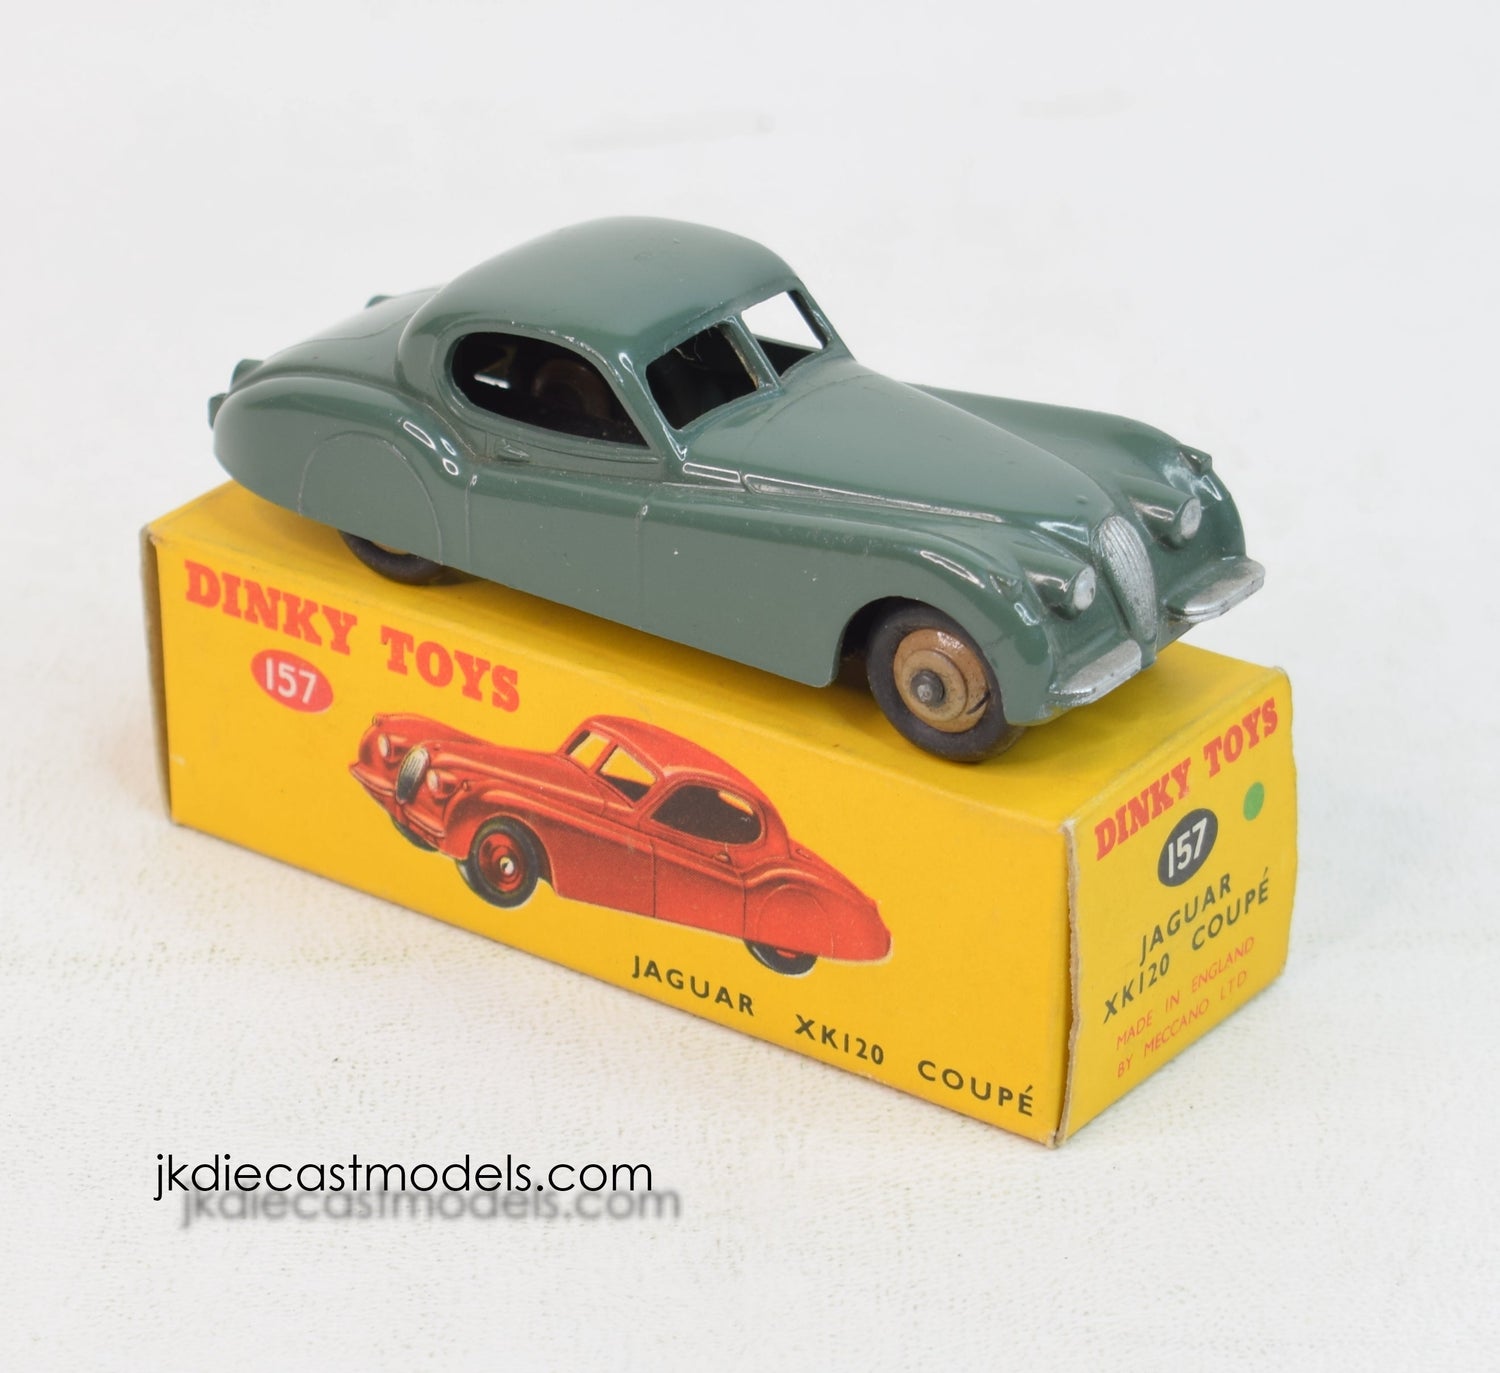 Dinky Toys 157 Jaguar Xk 120 Very Near Mint/Boxed